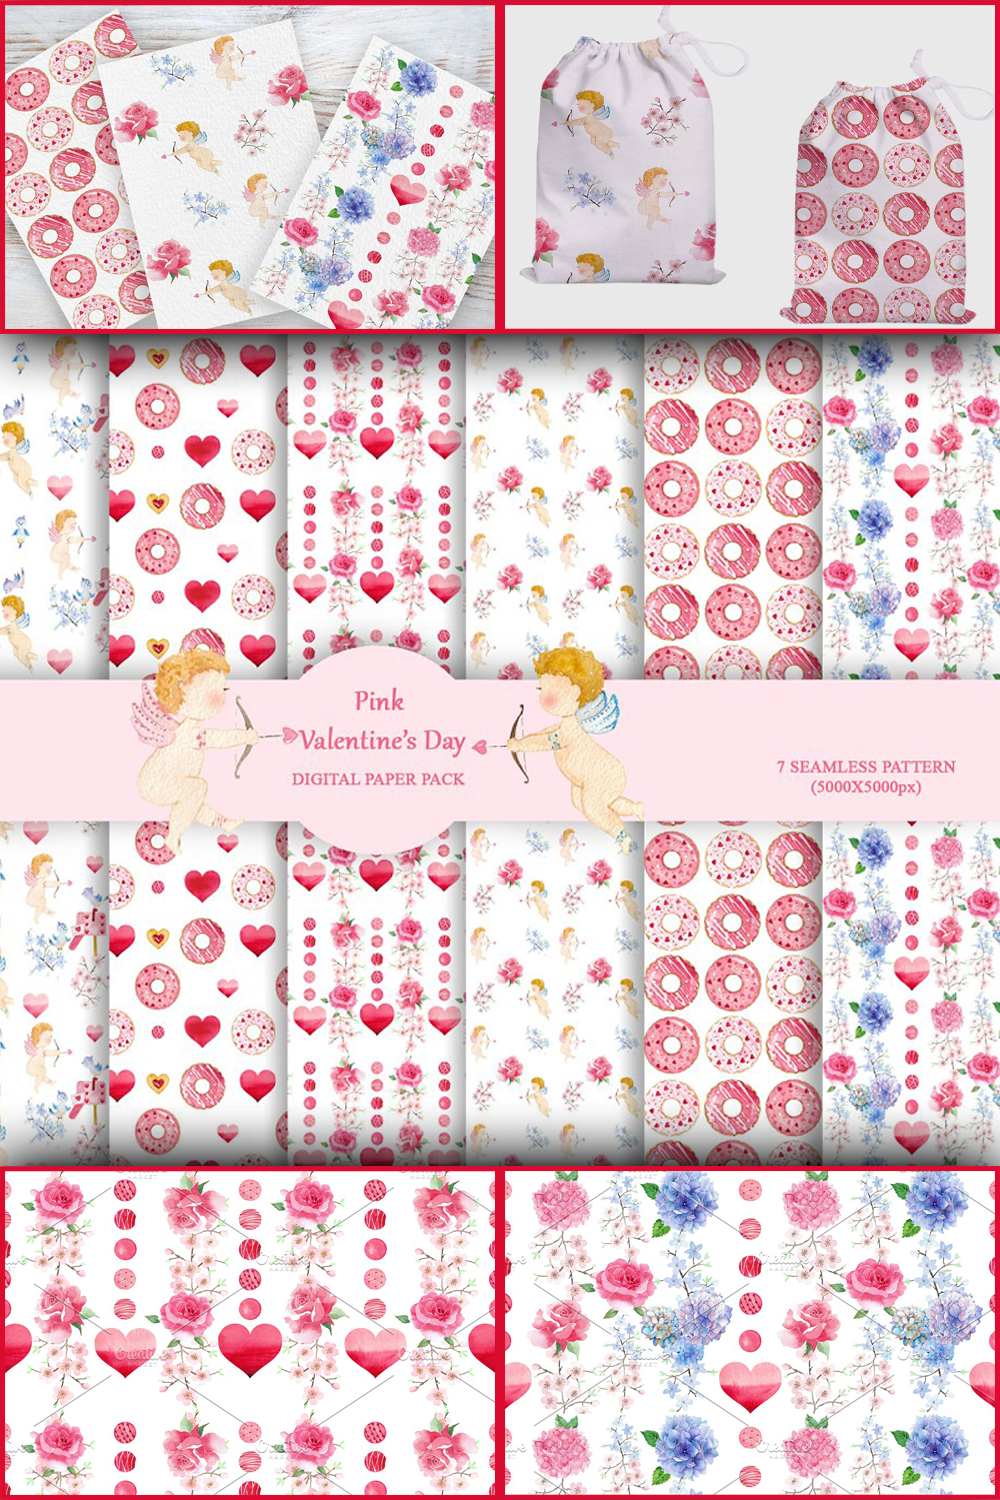 Valentines day digital paper pack of pinterest.